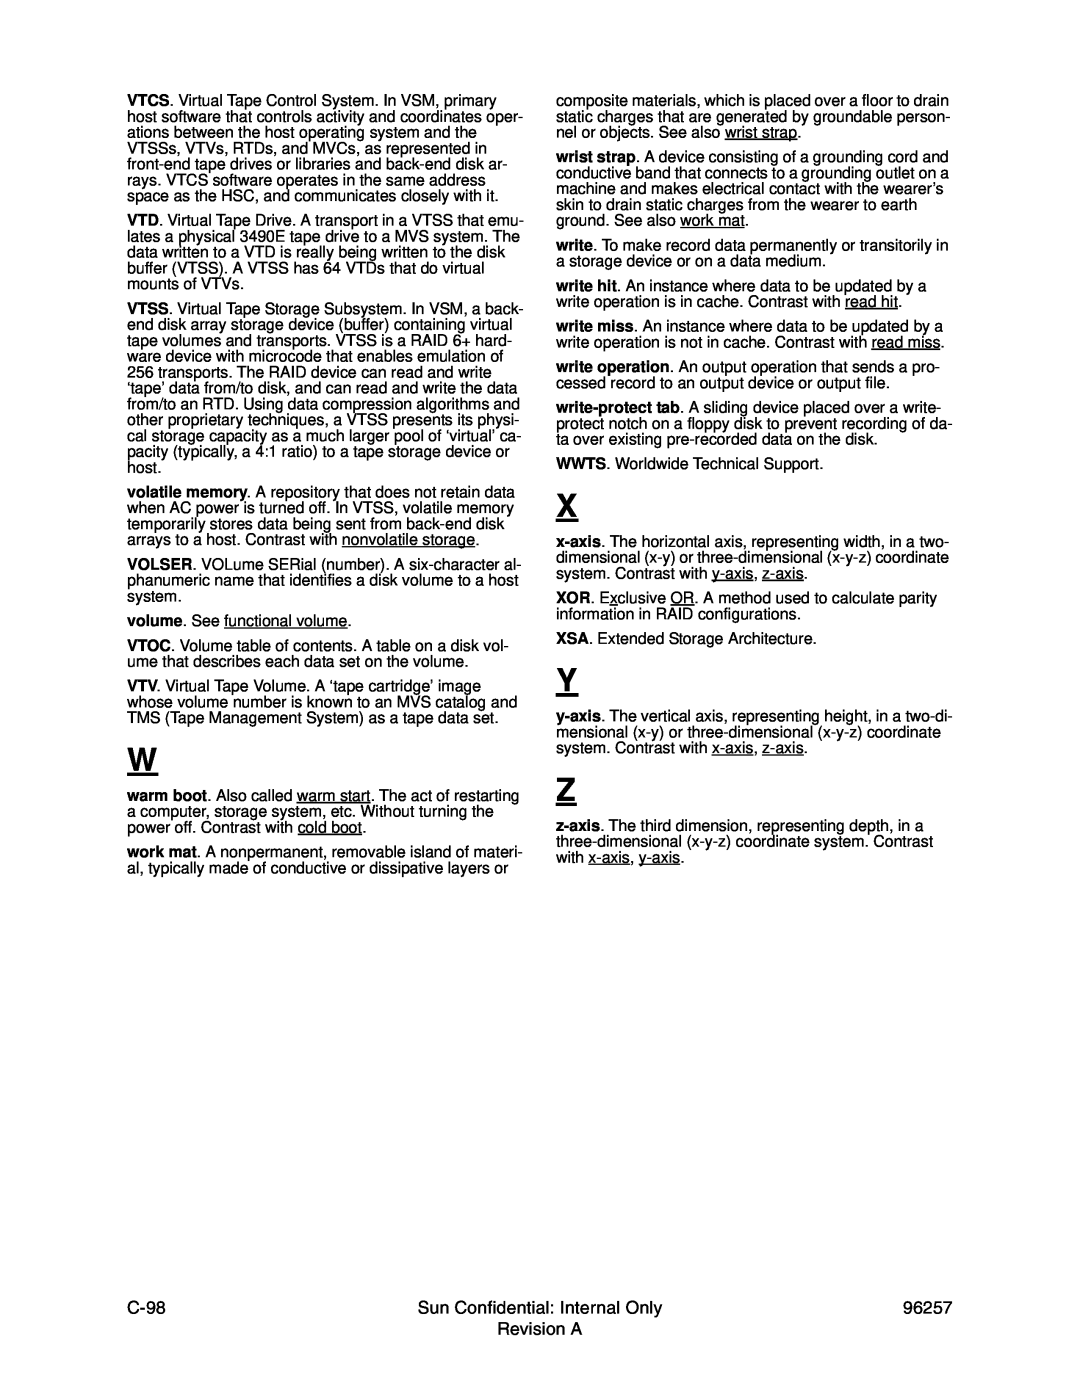 Sun Microsystems 96257 manual C-98, Sun Confidential Internal Only, Revision A 